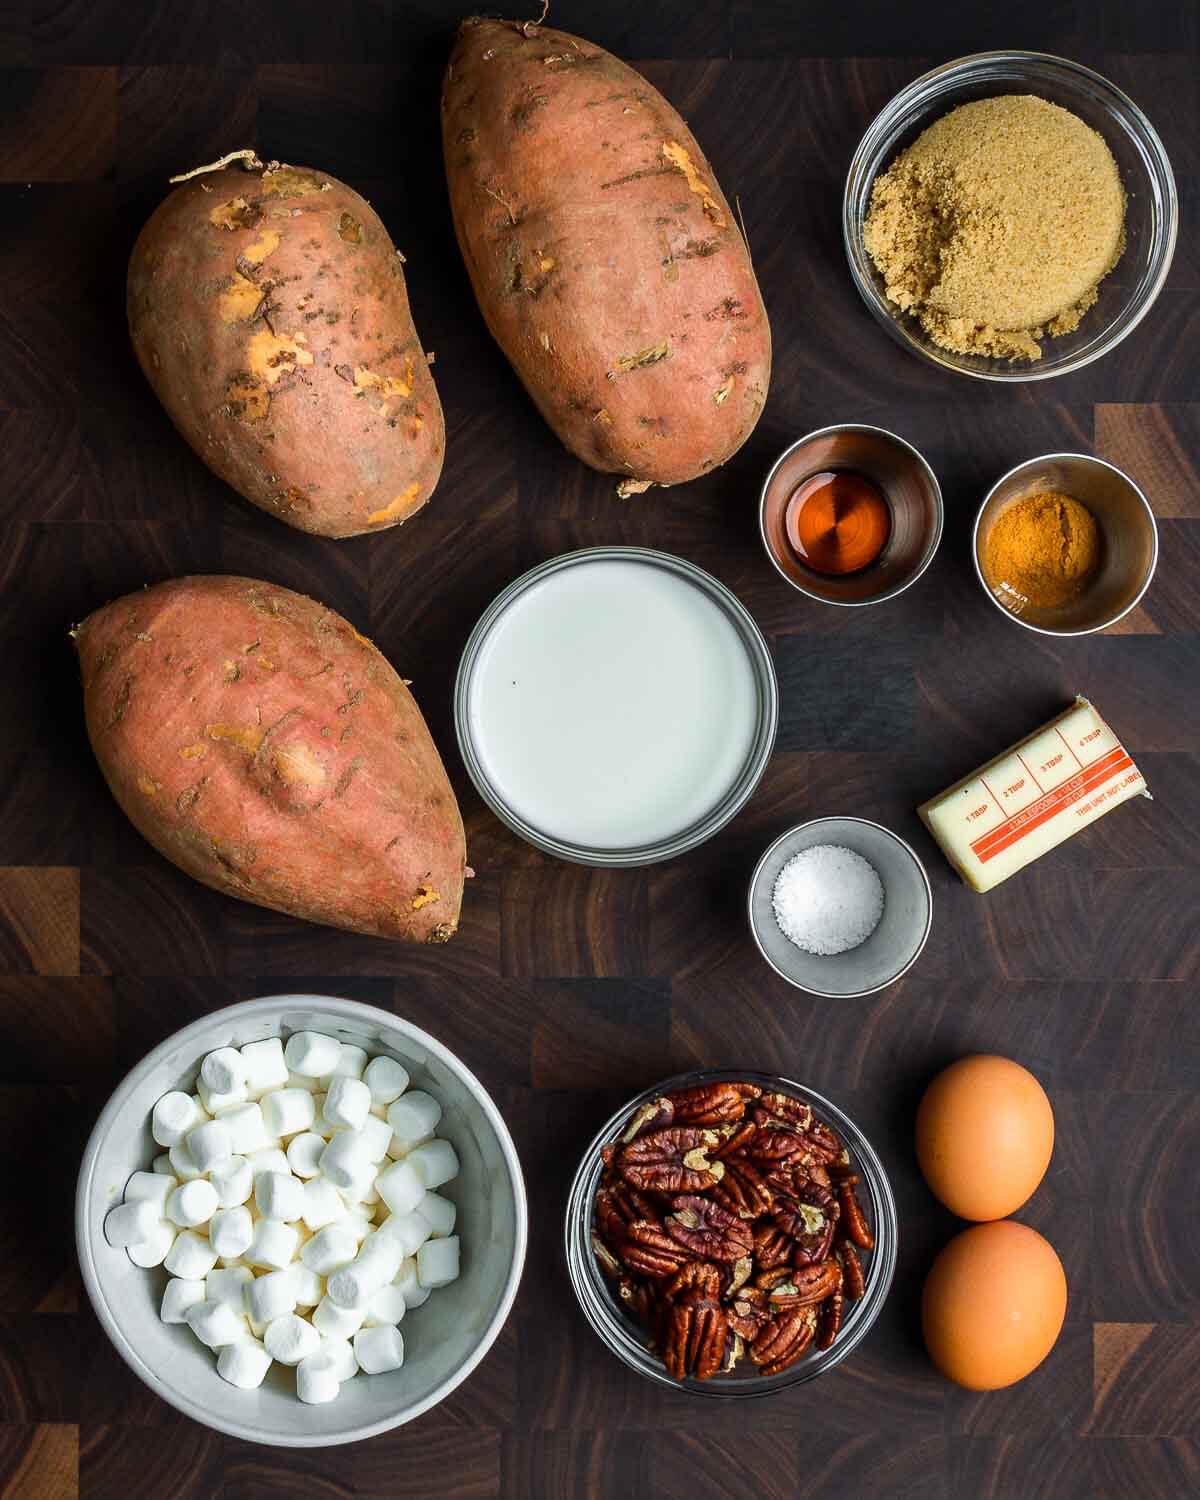 Ingredients shown: sweet potatoes, brown sugar, vanilla, cinnamon, milk, salt, butter, marshmallows, pecans, and eggs.